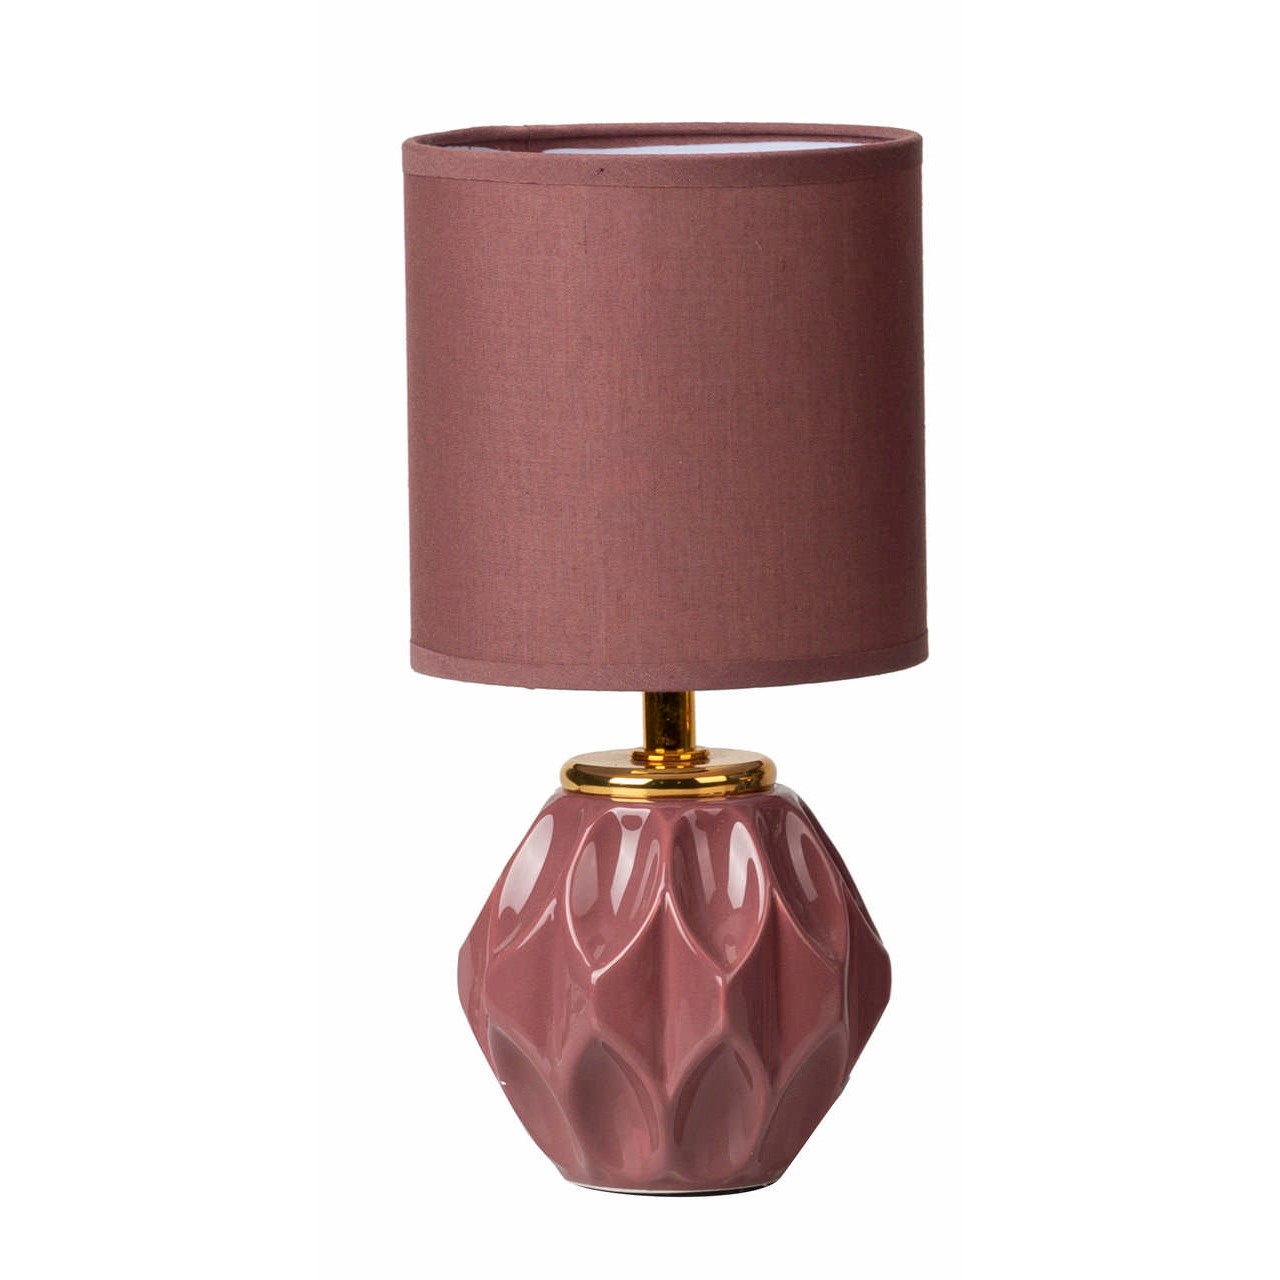 34752-lampara-mesita-ceramica-rosa-fuerte-1.jpg